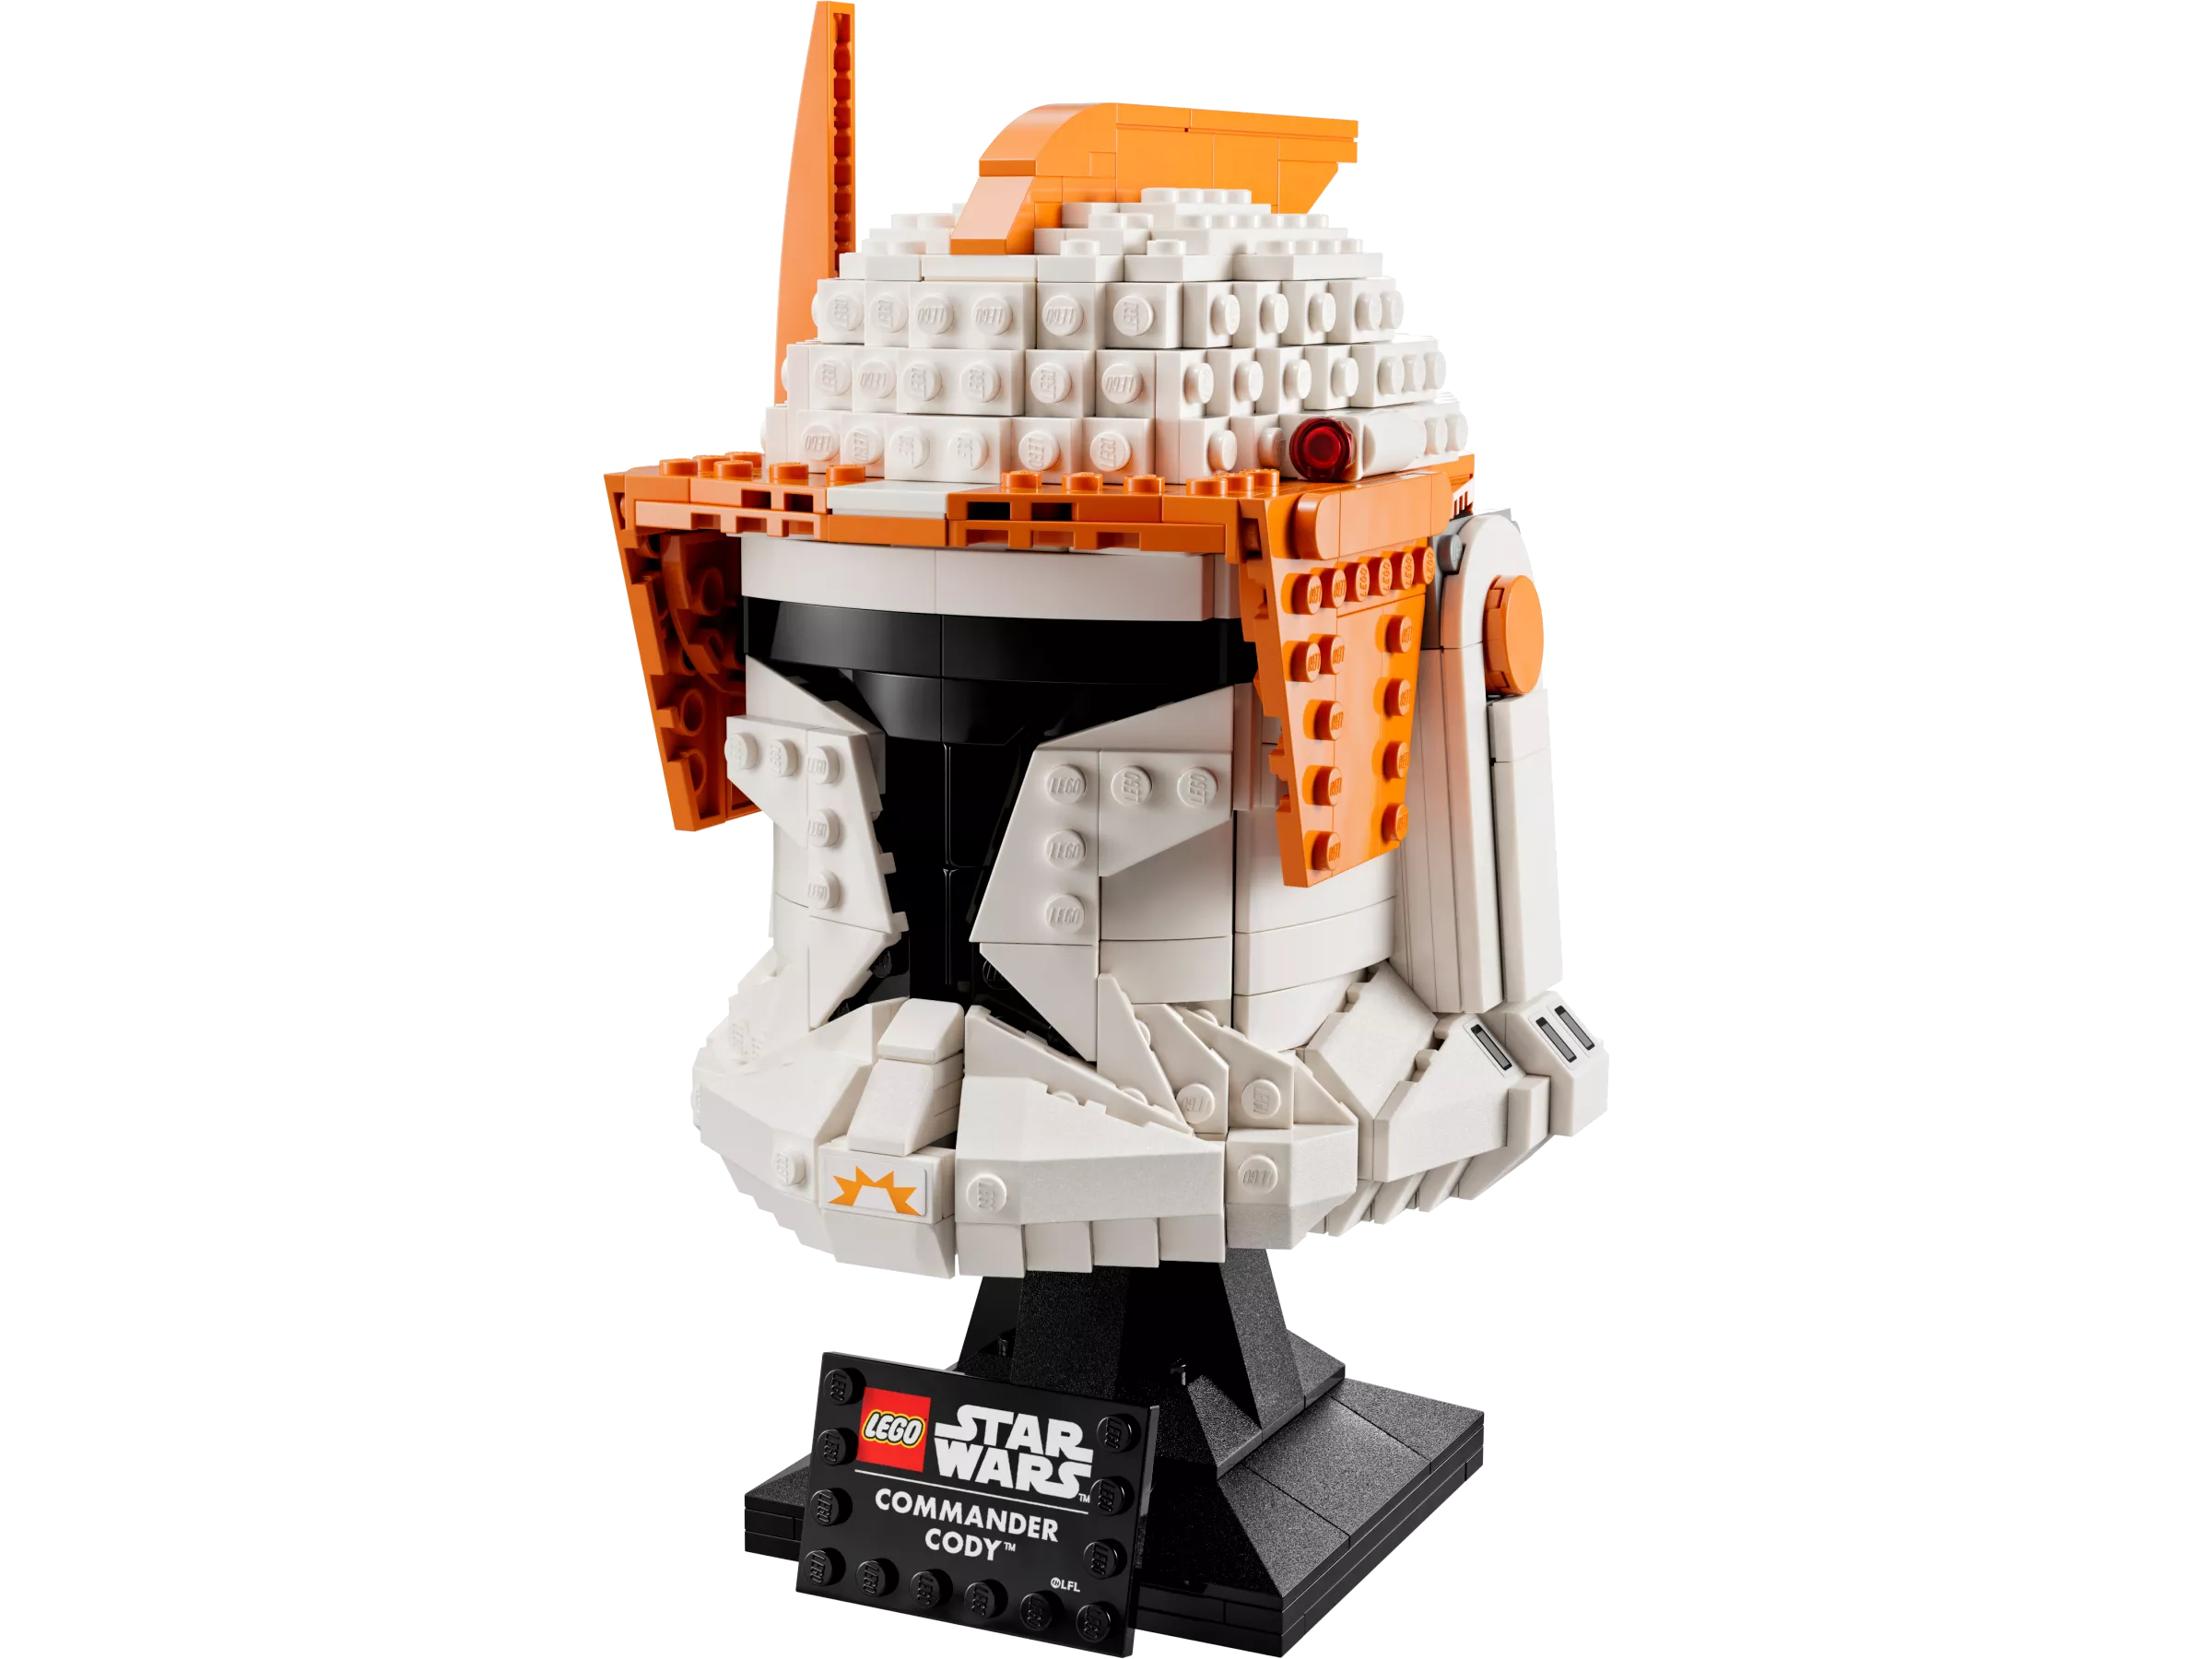 LEGO 75350 Clone Commander Cody™ Helm